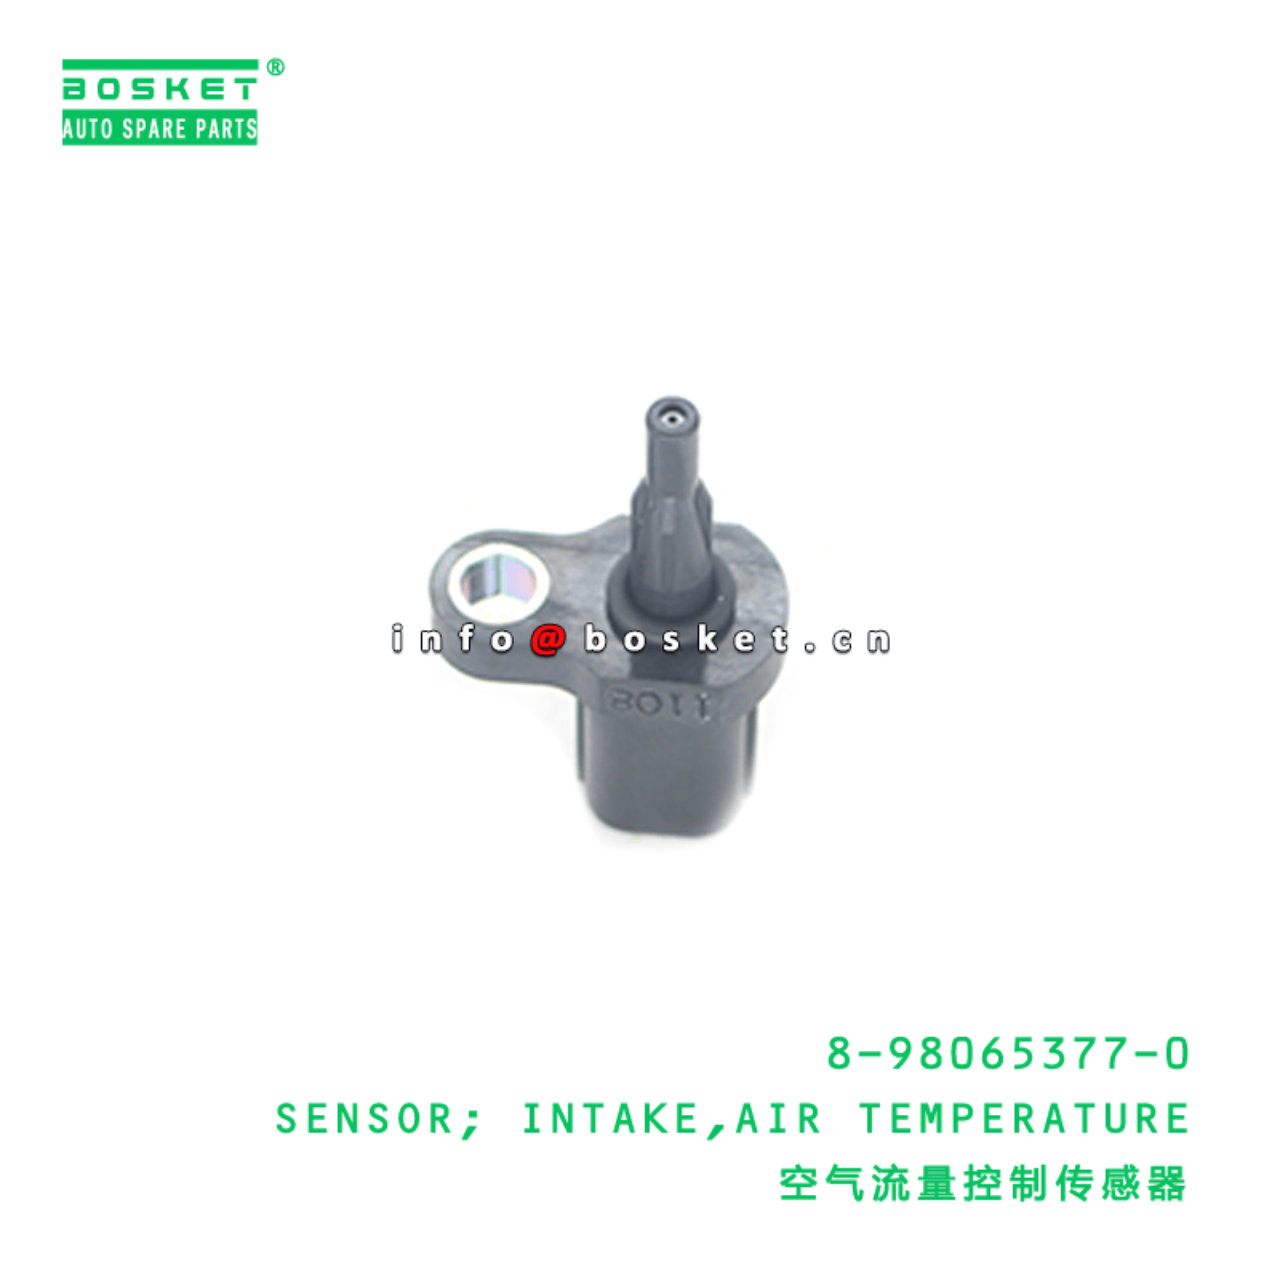 8-98065377-0 Air Temperature Intake Sensor 8980653770 Suitable for ISUZU 700P 4HK1